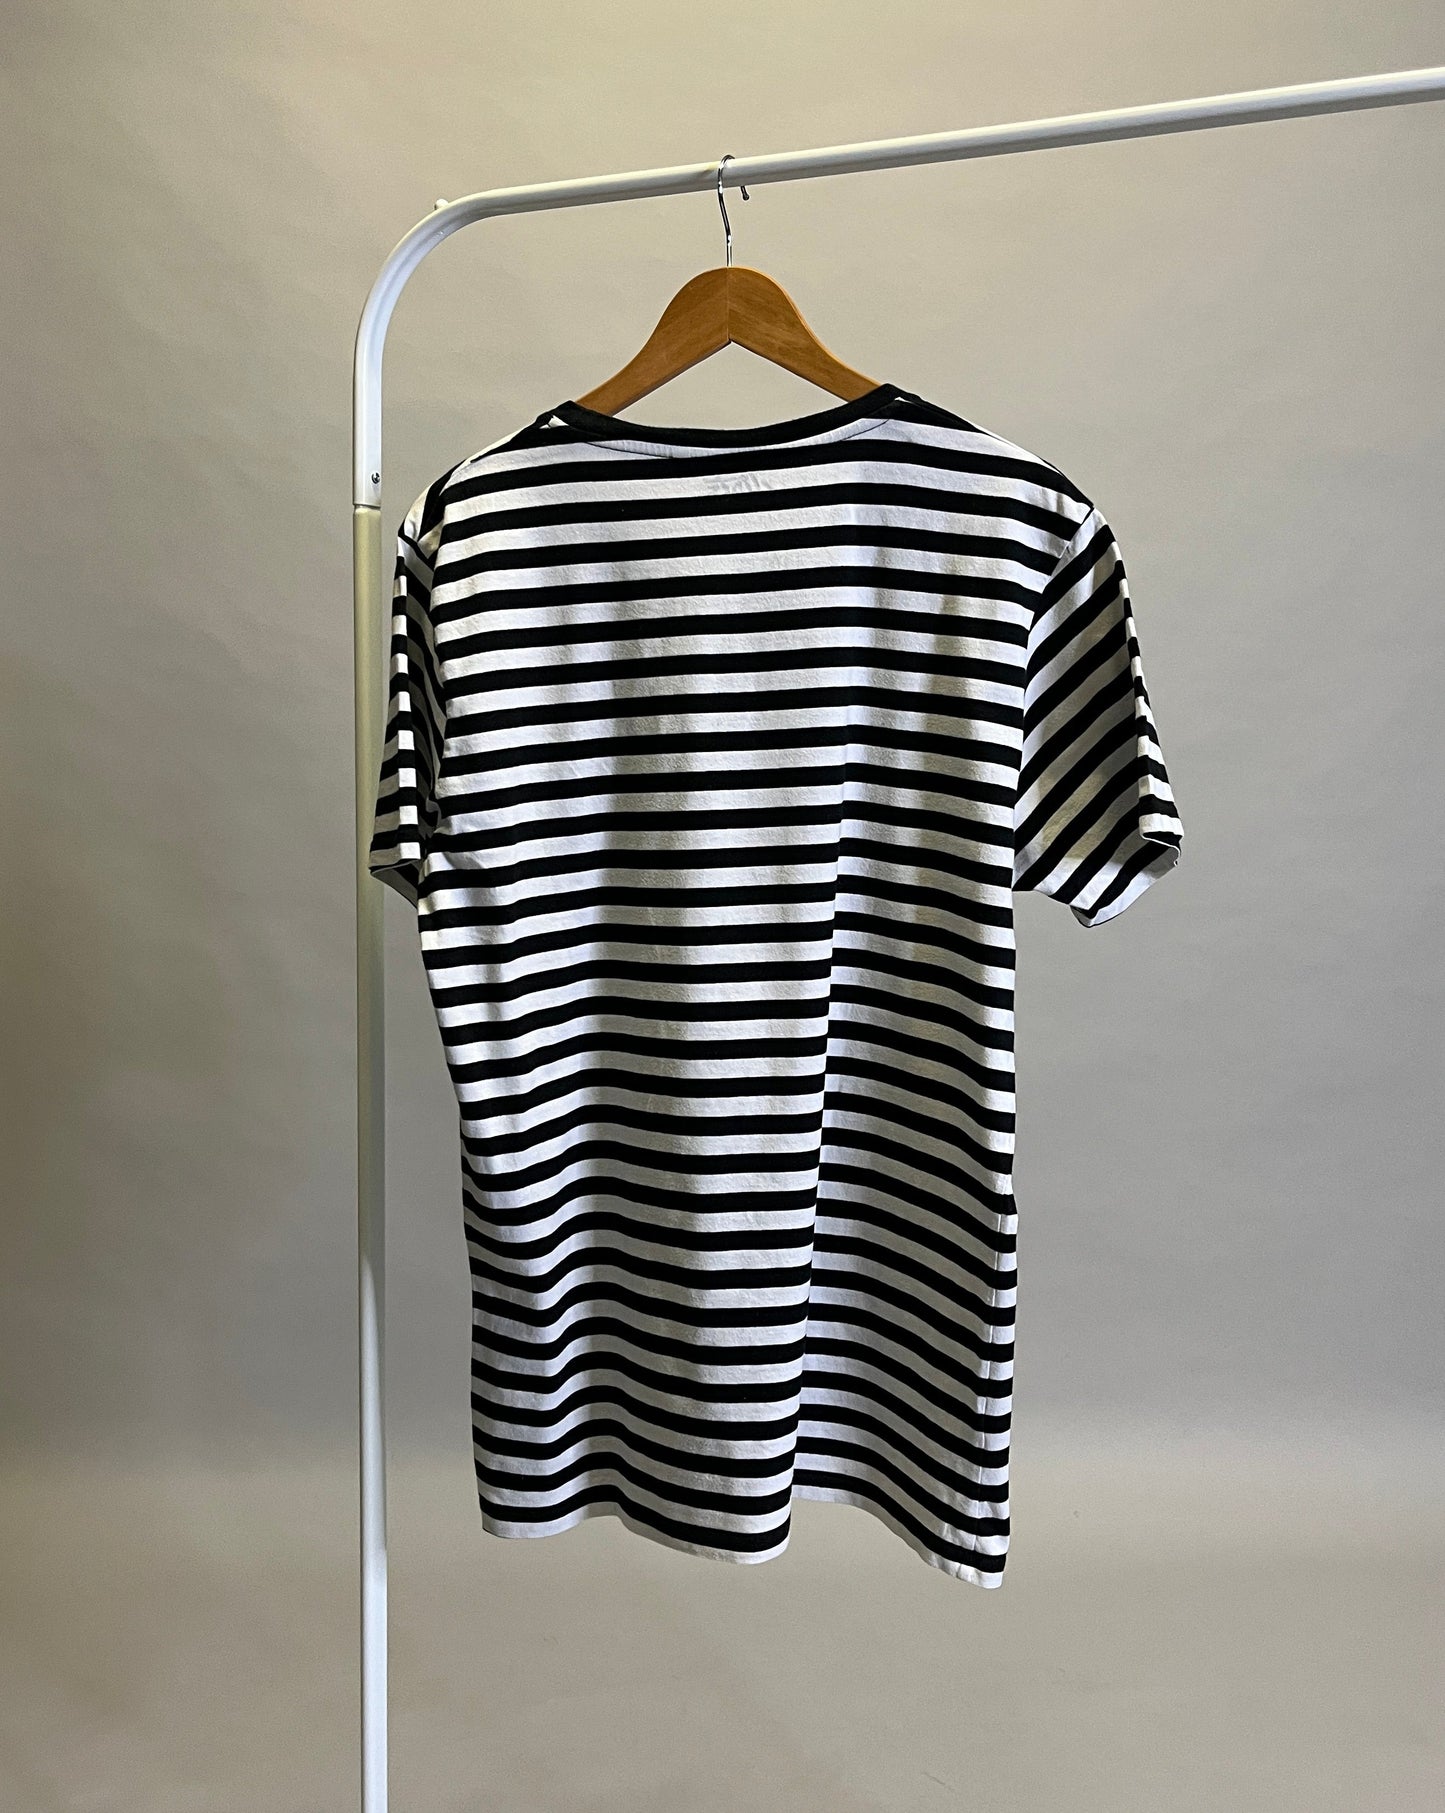 PRE-LOVED Striped T-Shirt, L